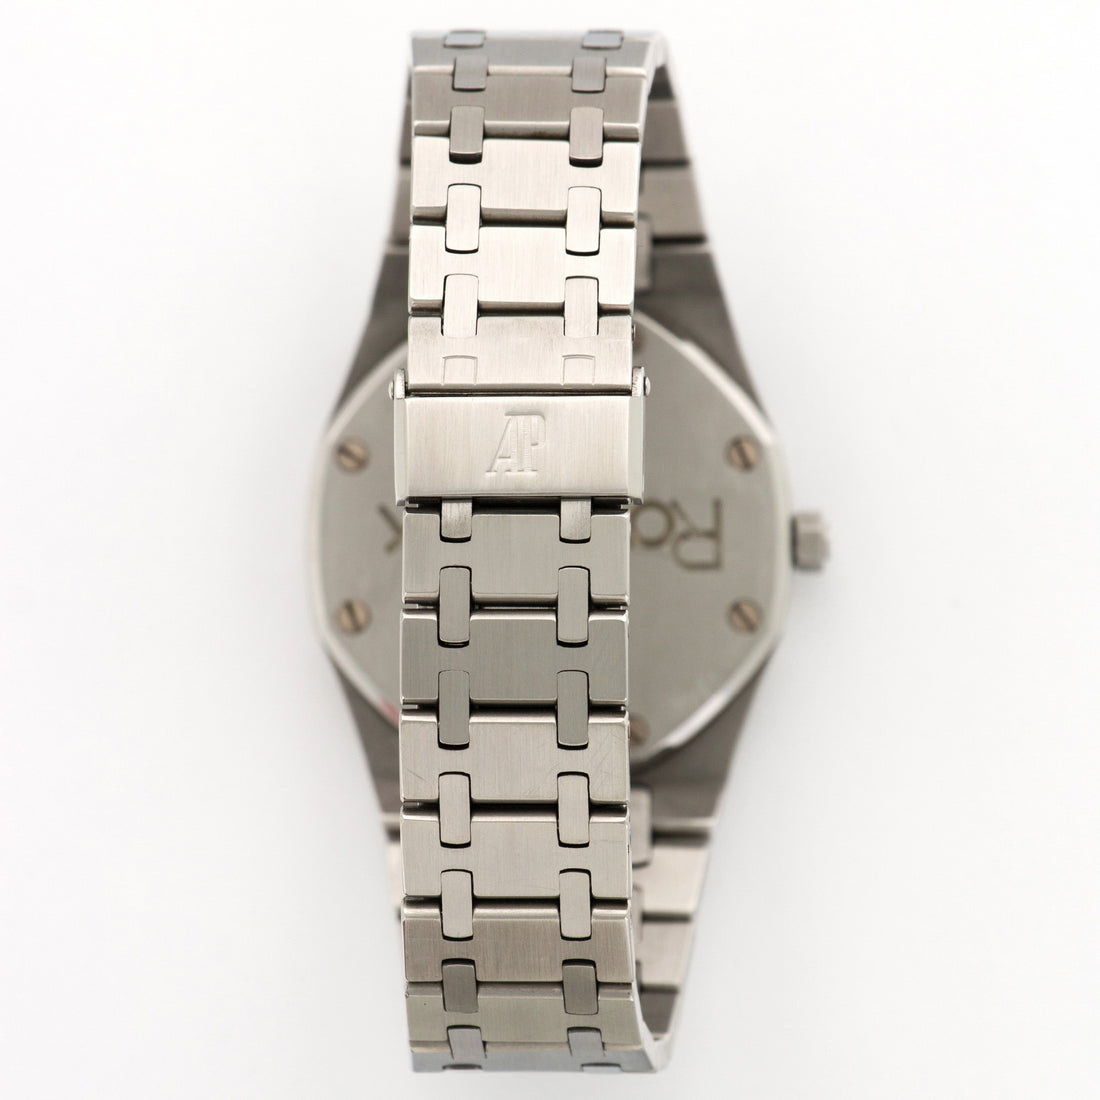 Audemars Piguet Royal Oak Automatic Watch Ref. 4100